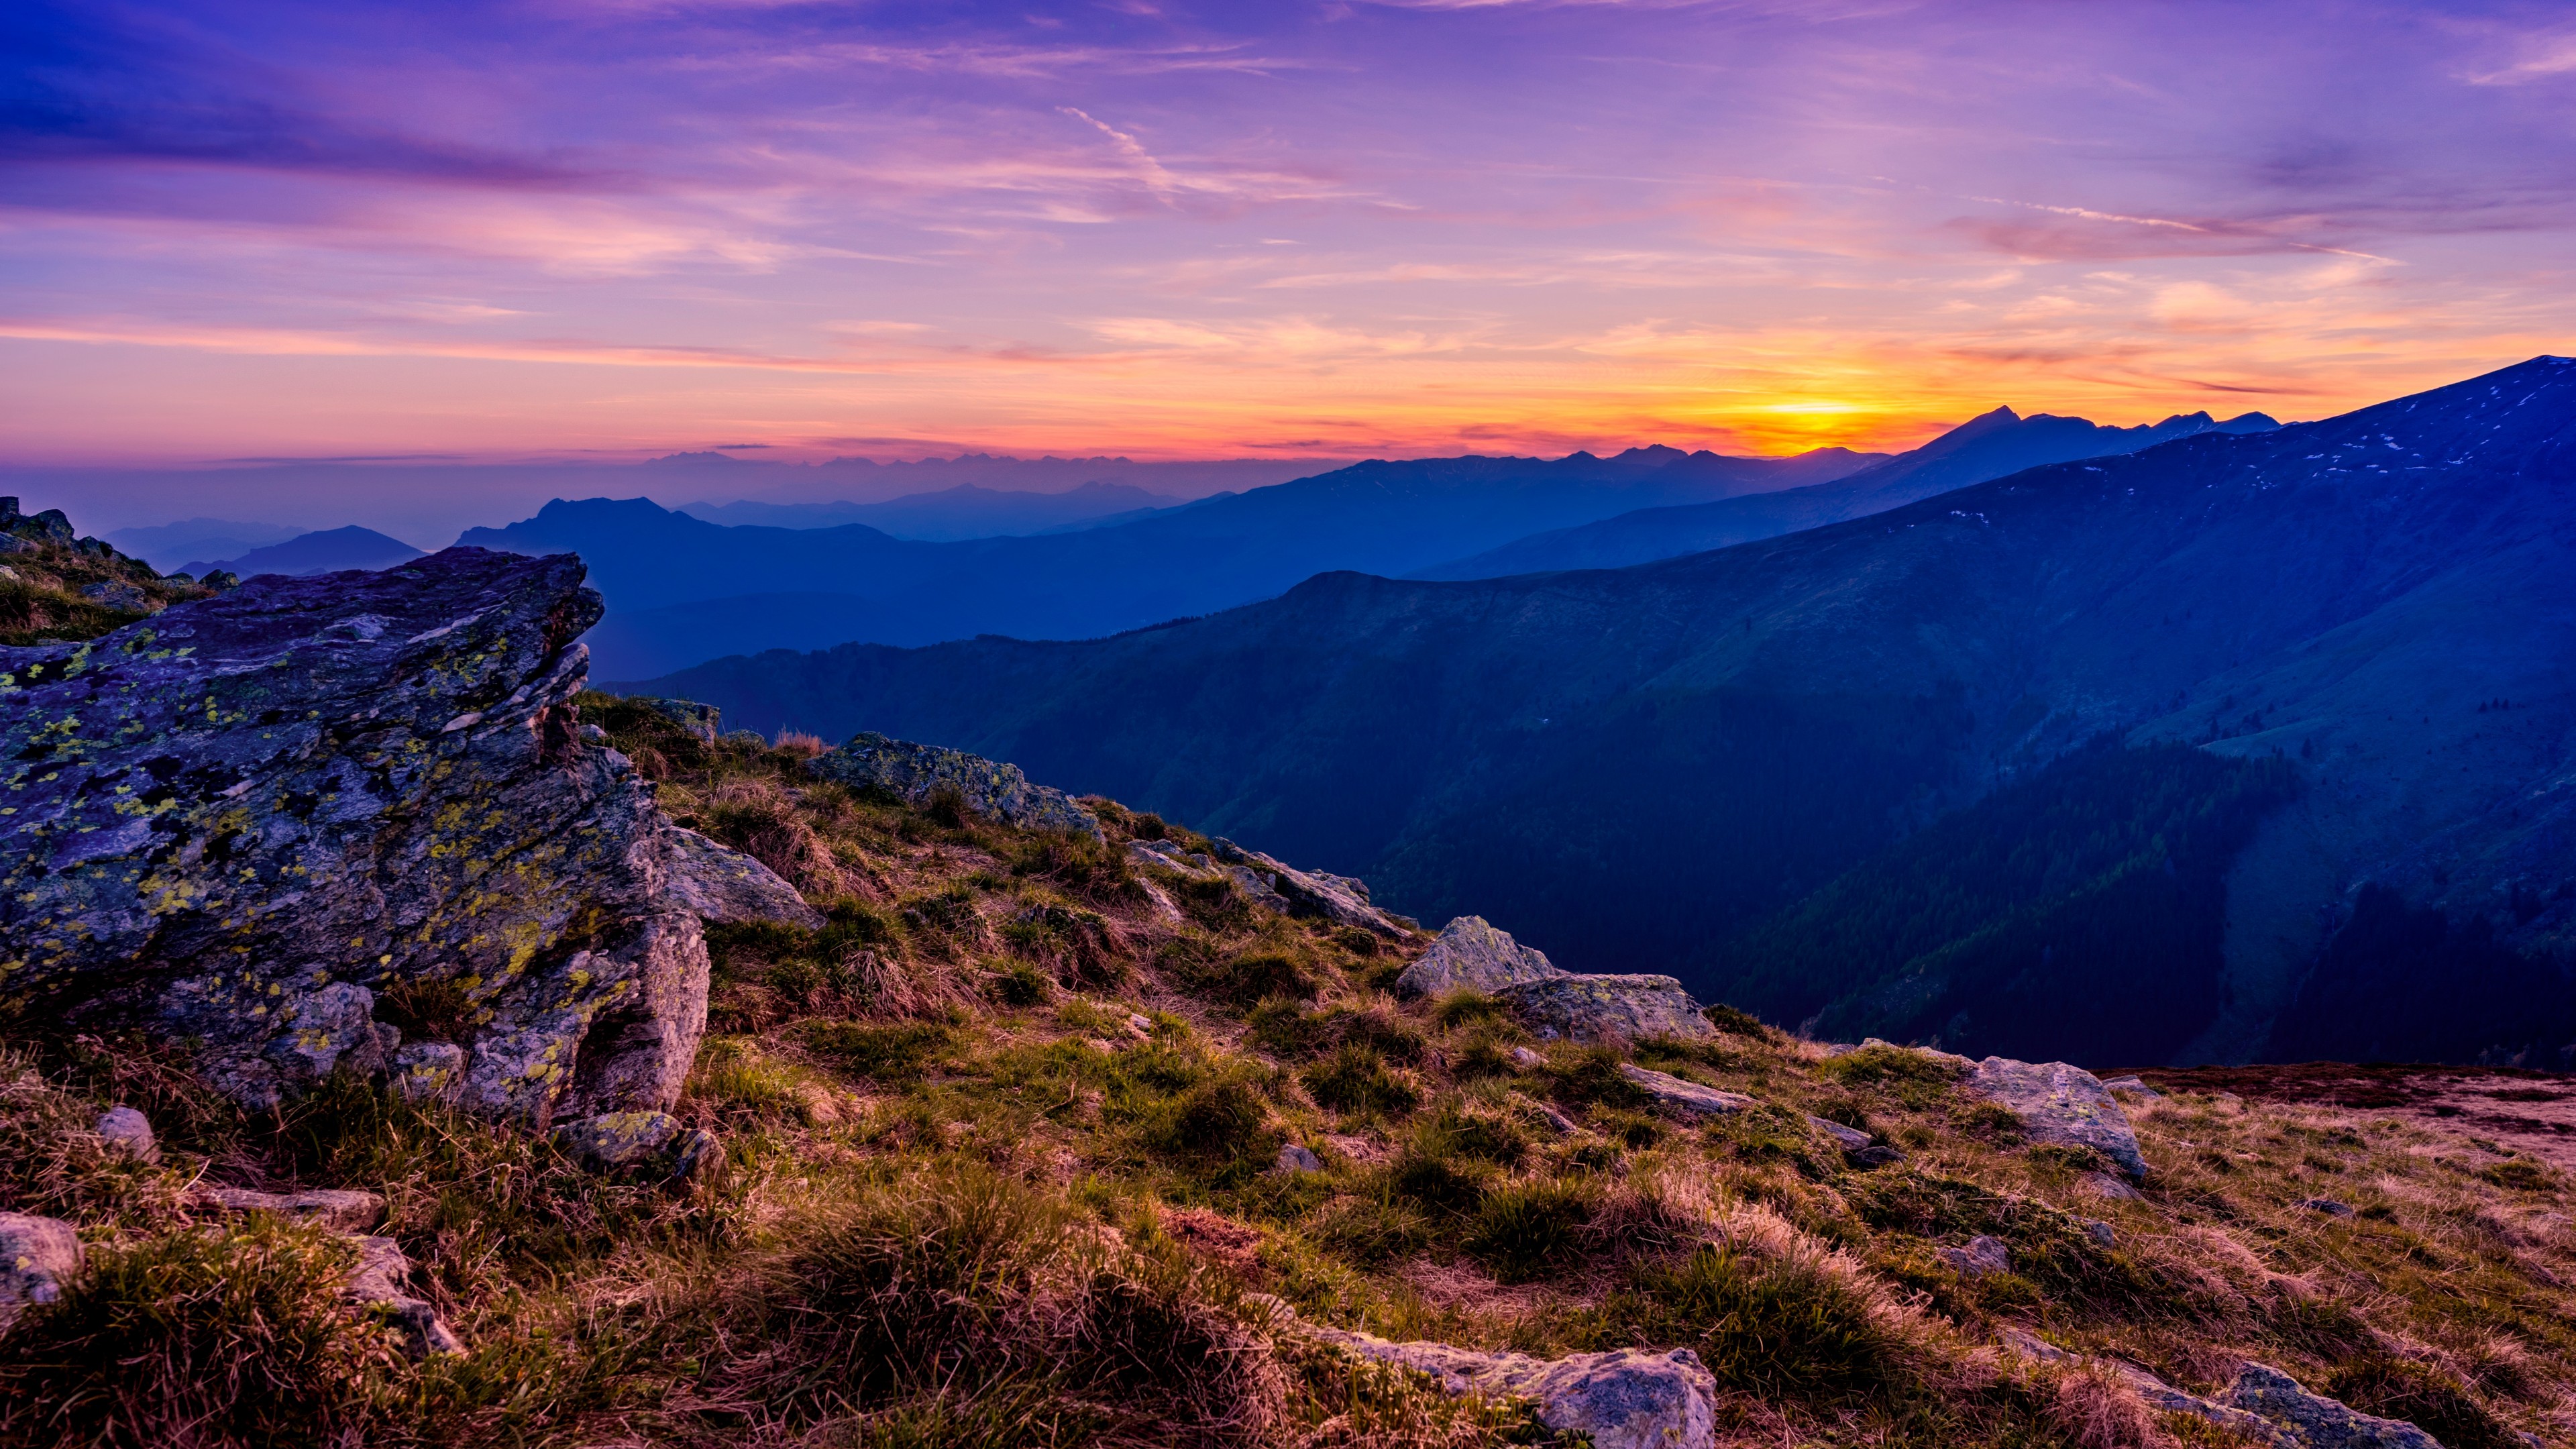 Stunning Mountain Sunset Scenery UHD 3840X2160 macOs Wallpaper